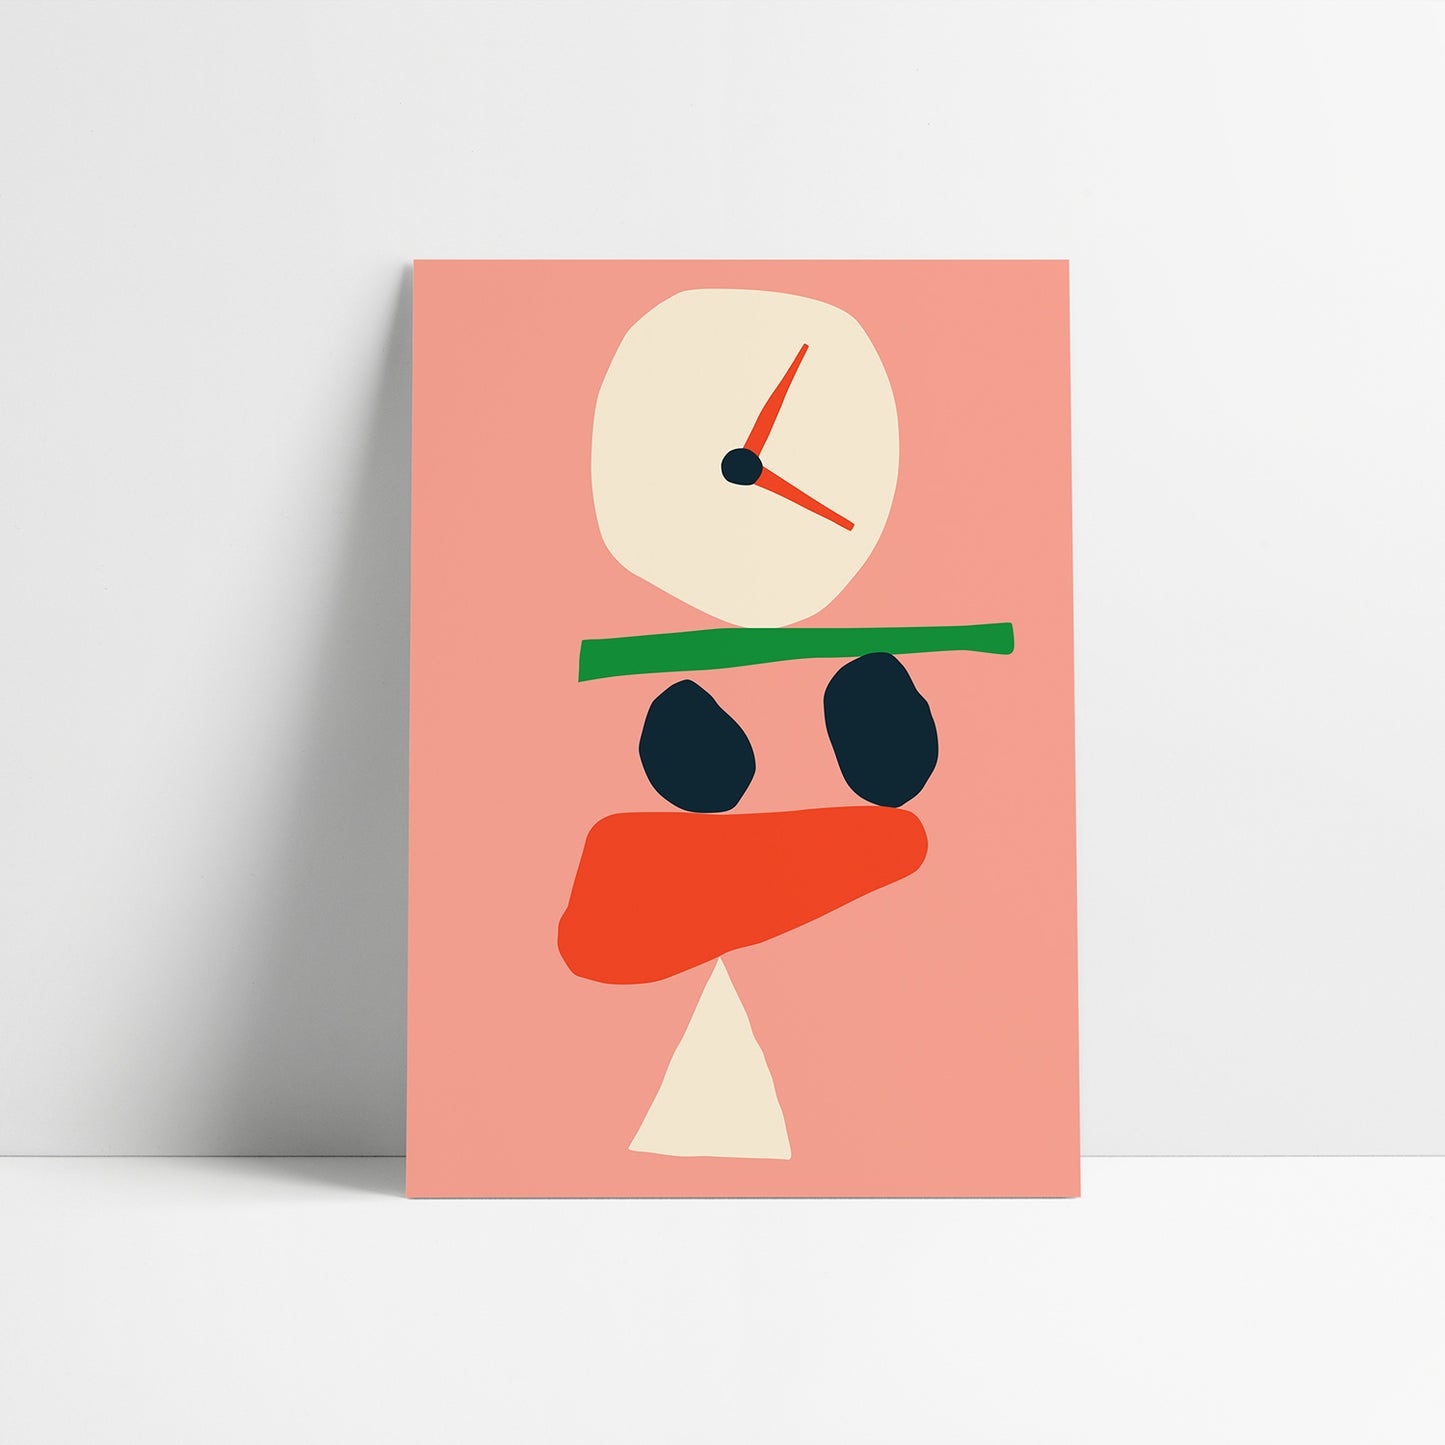 Clock - Poster 50 x 70cm